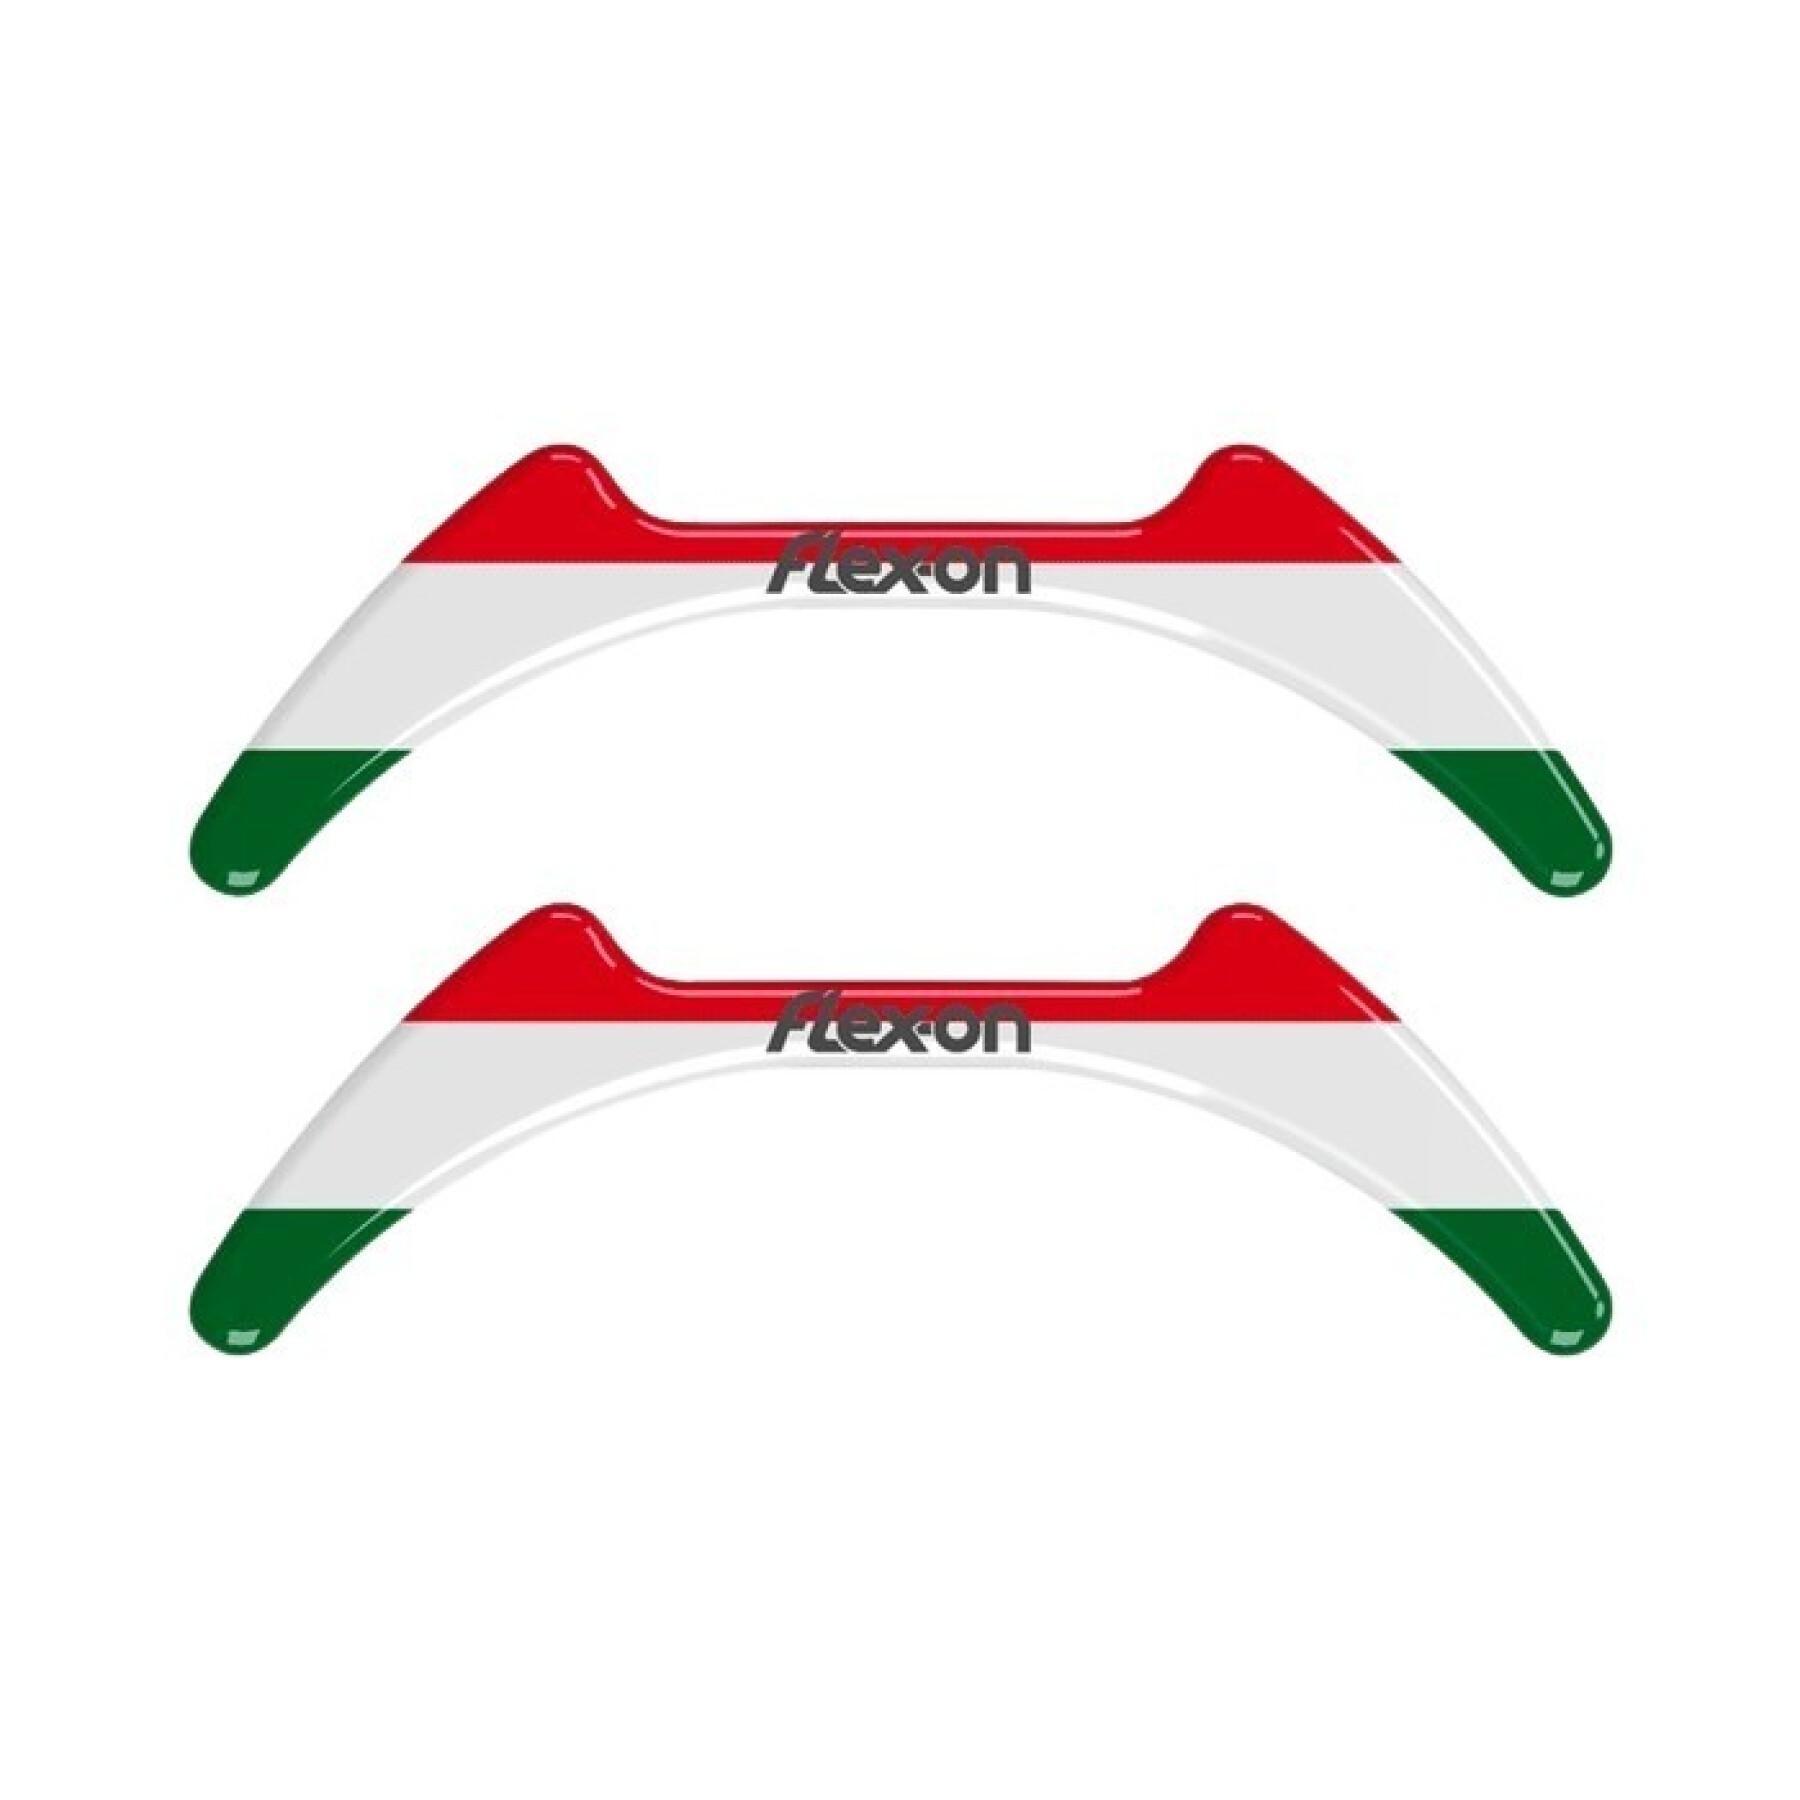 Riding stickers Flex On Hongrie